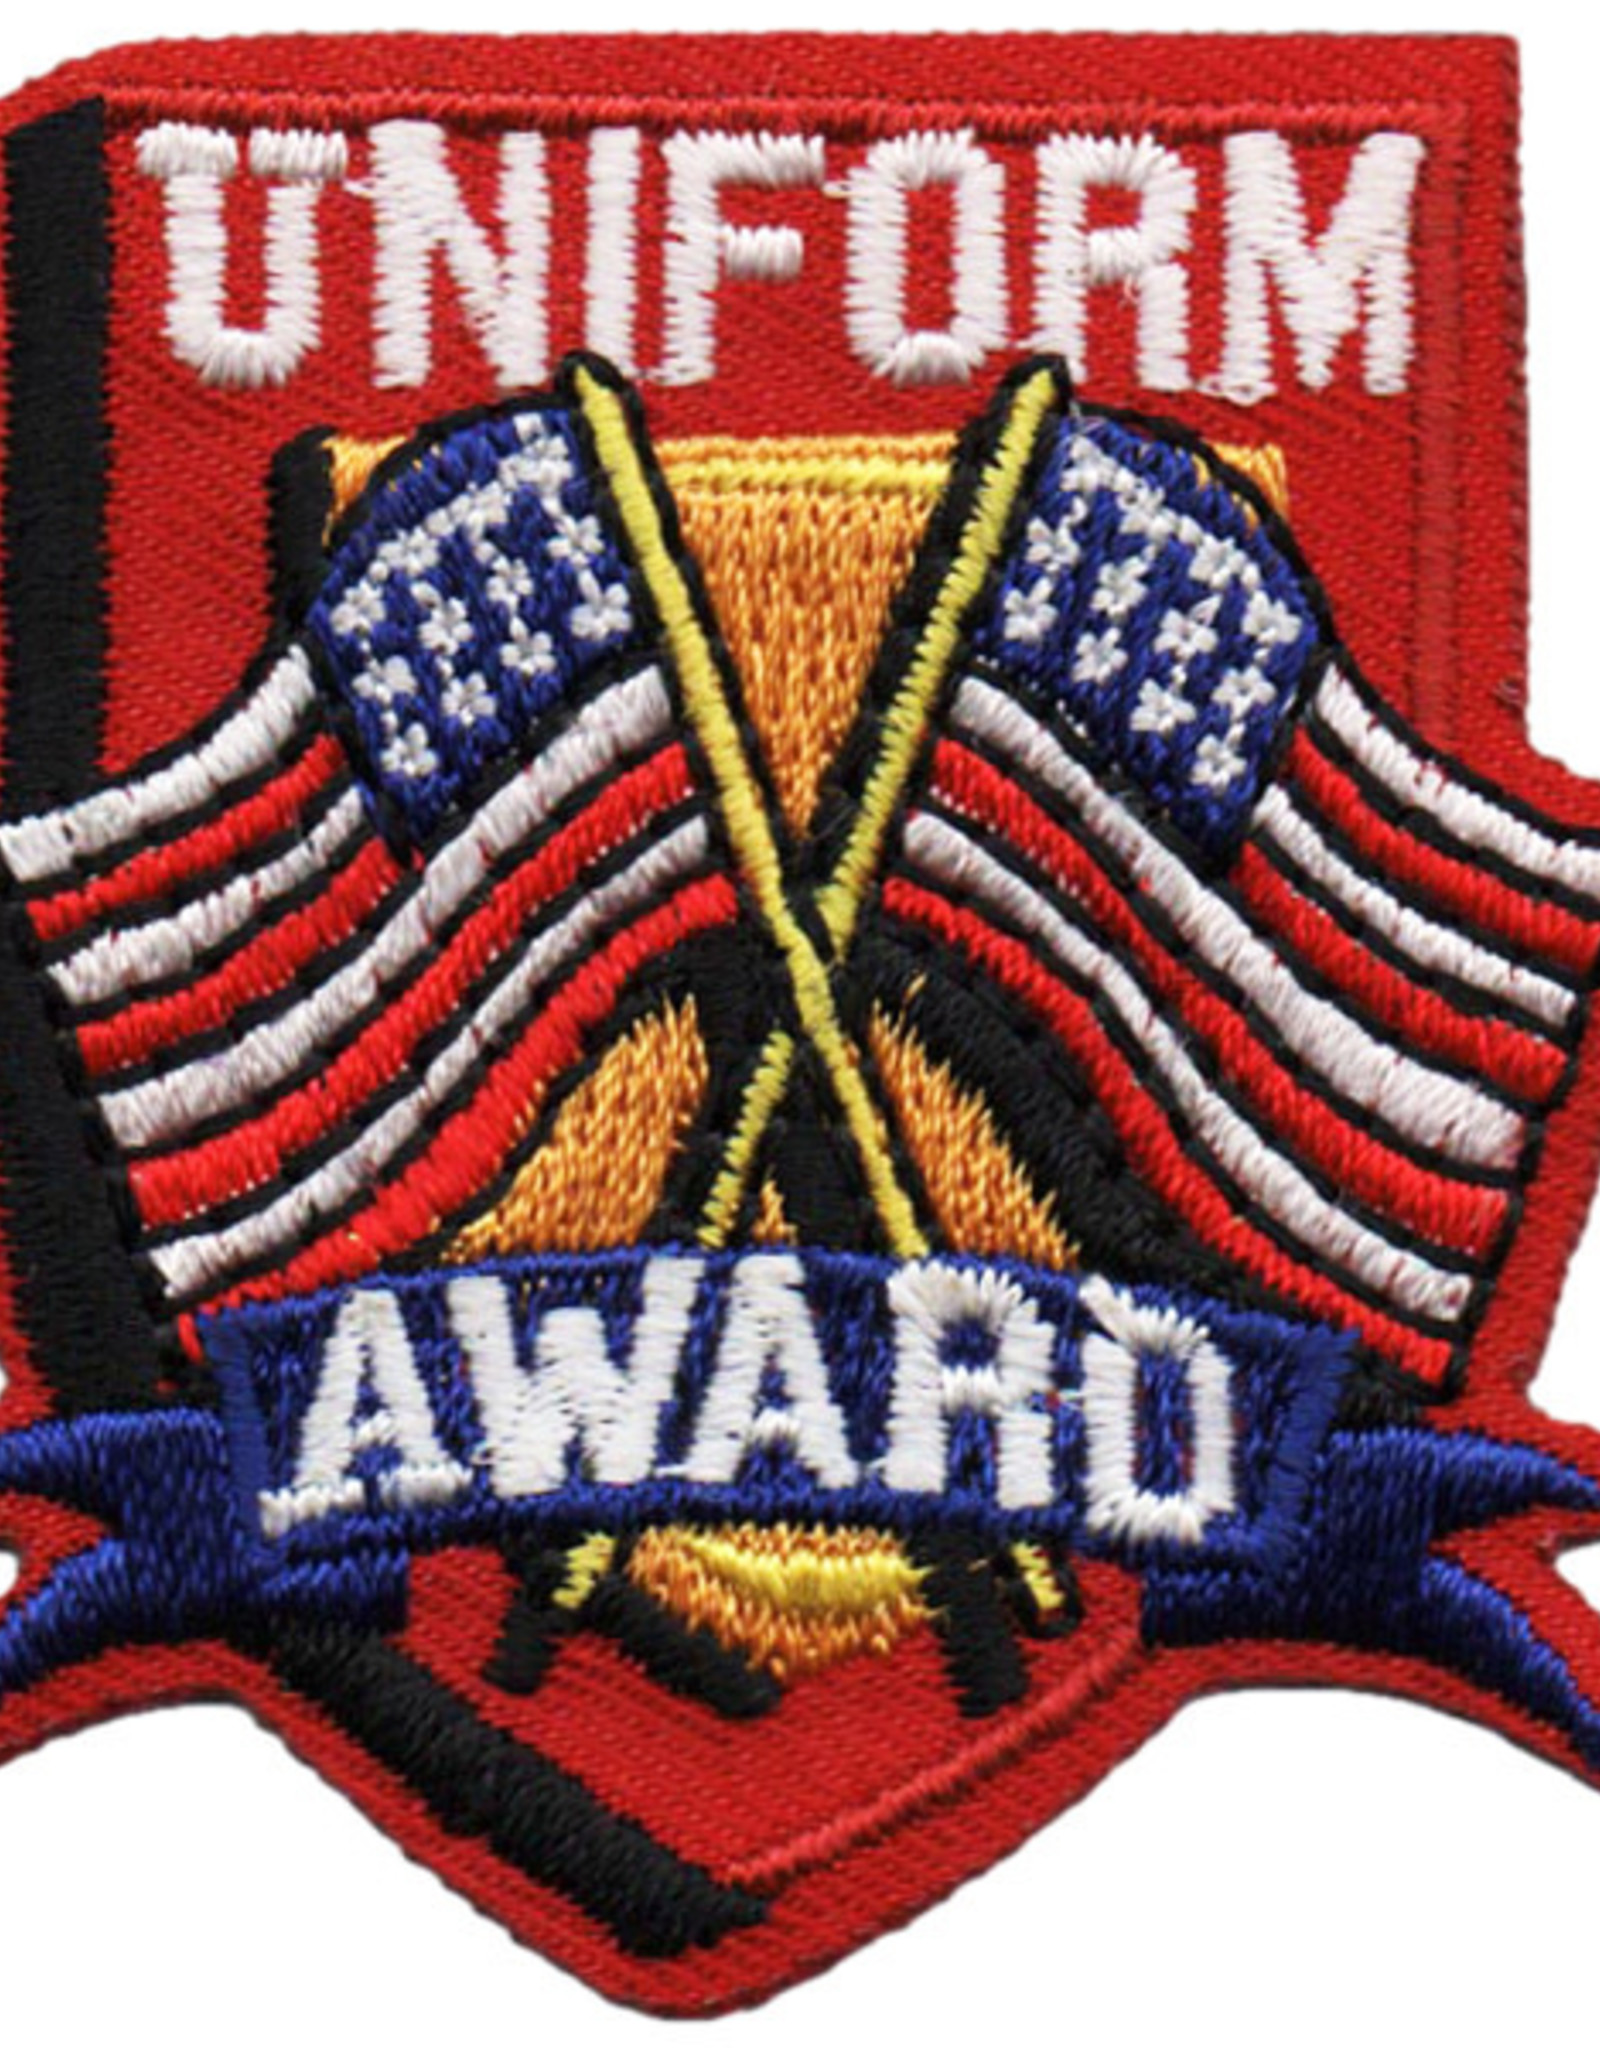 Uniform Award w/ American Flags Fun Patch